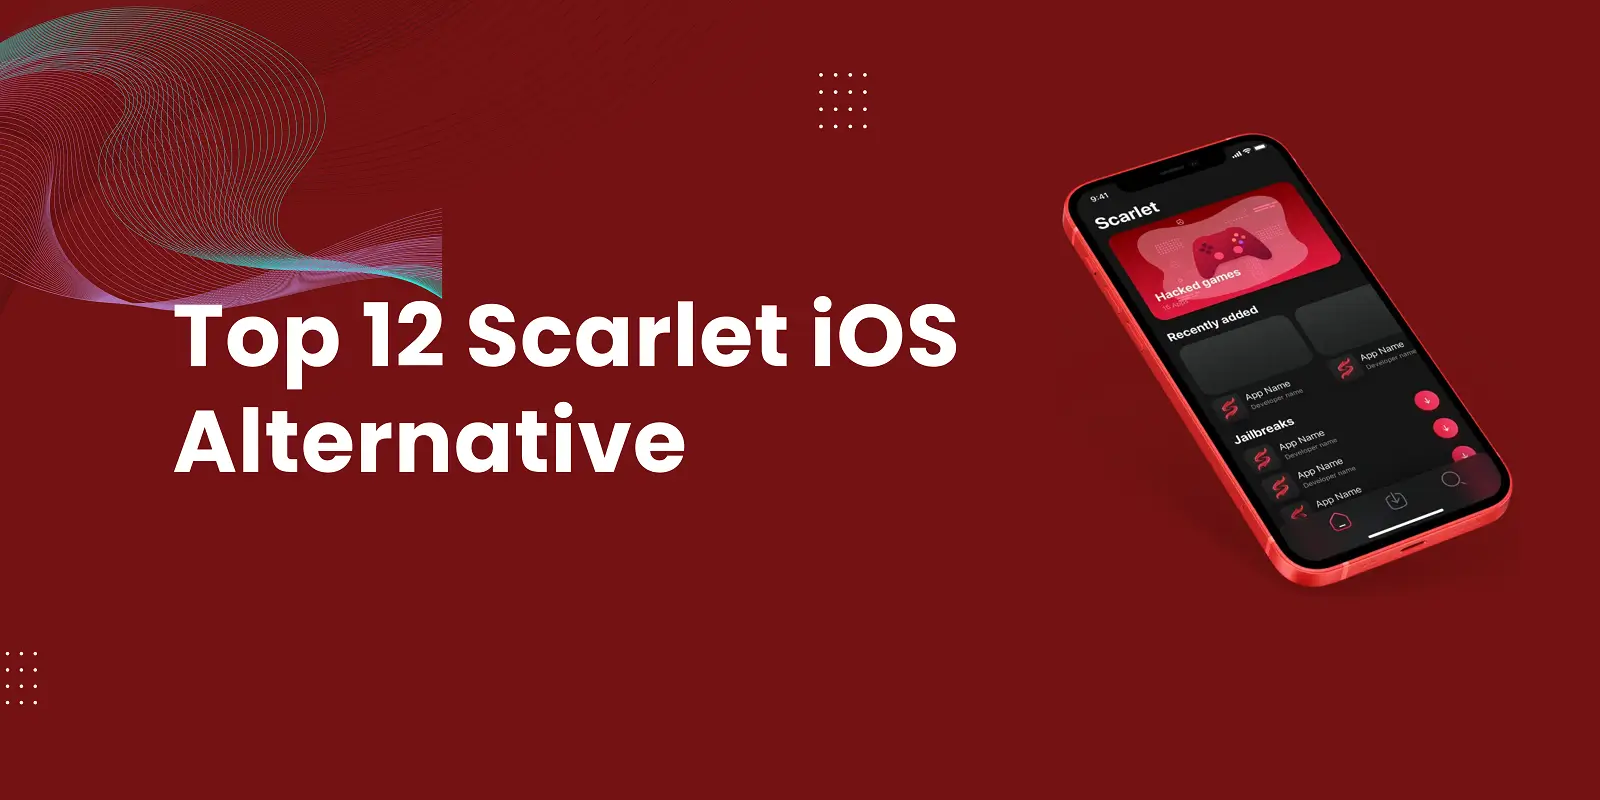 Top 12 Scarlet iOS Alternative